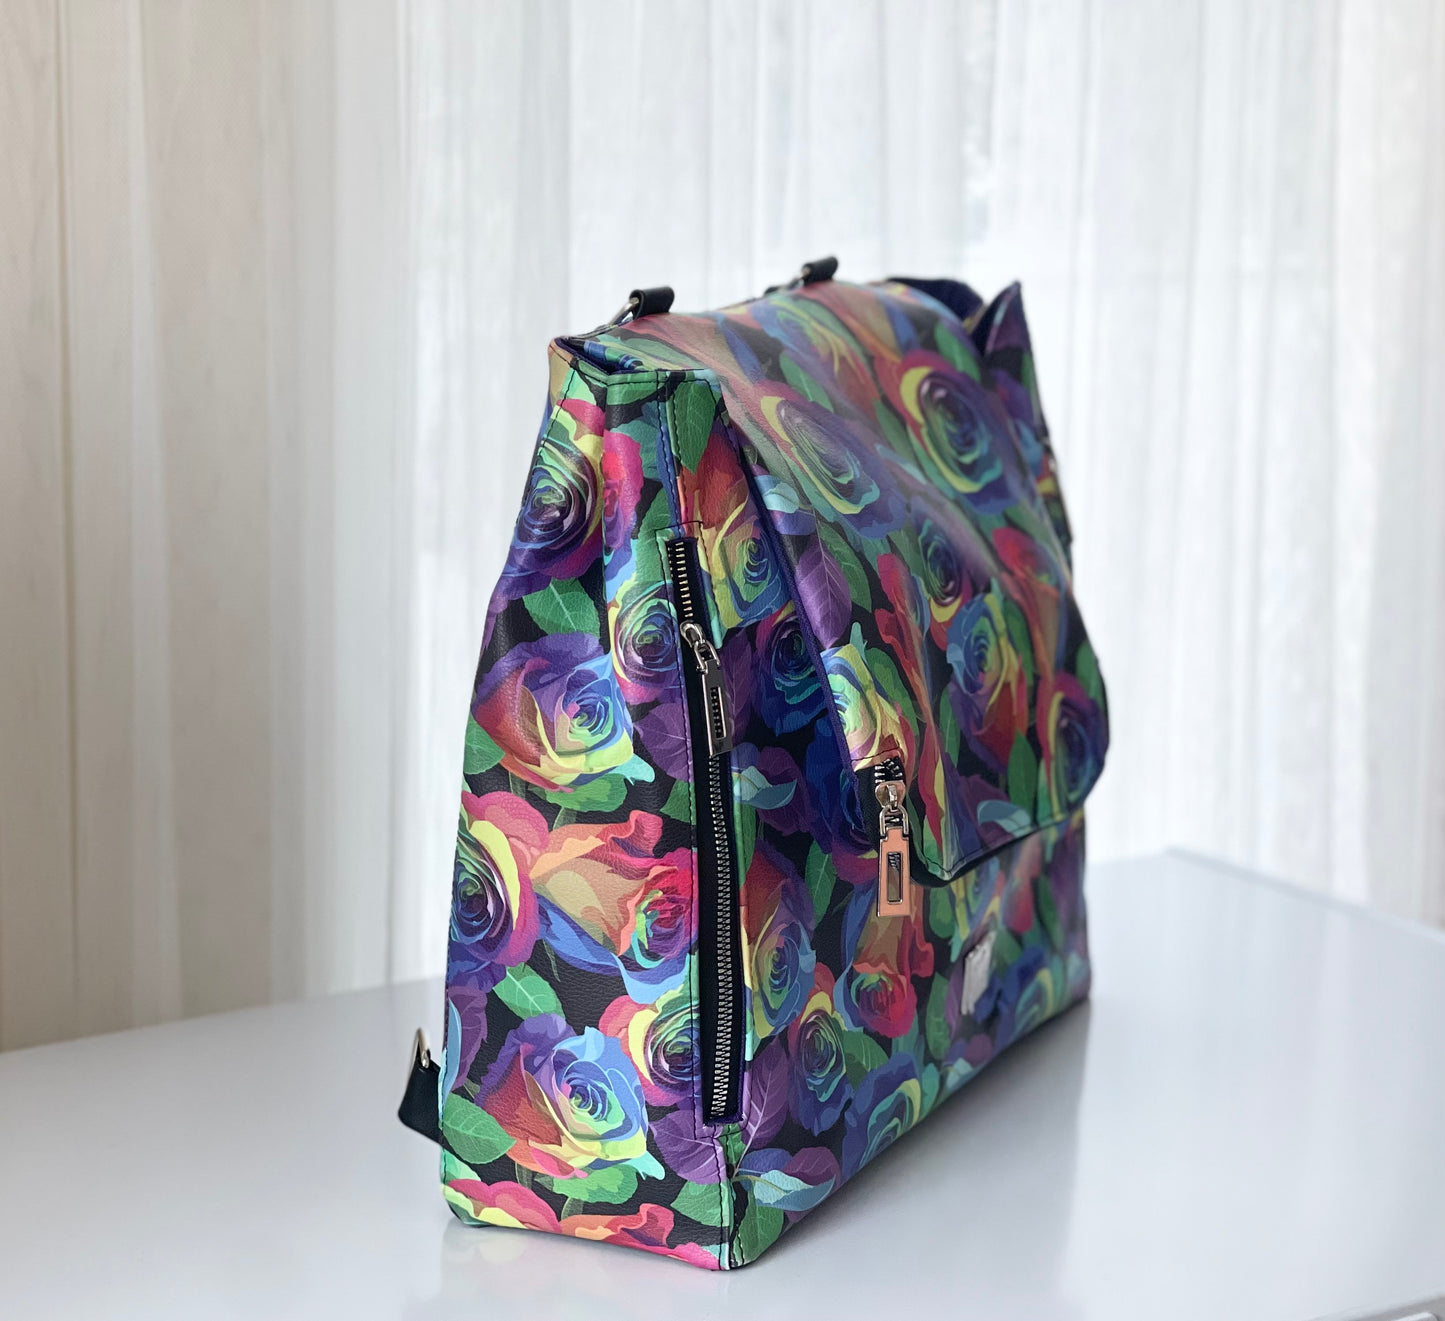 Bella Convertible Backpack